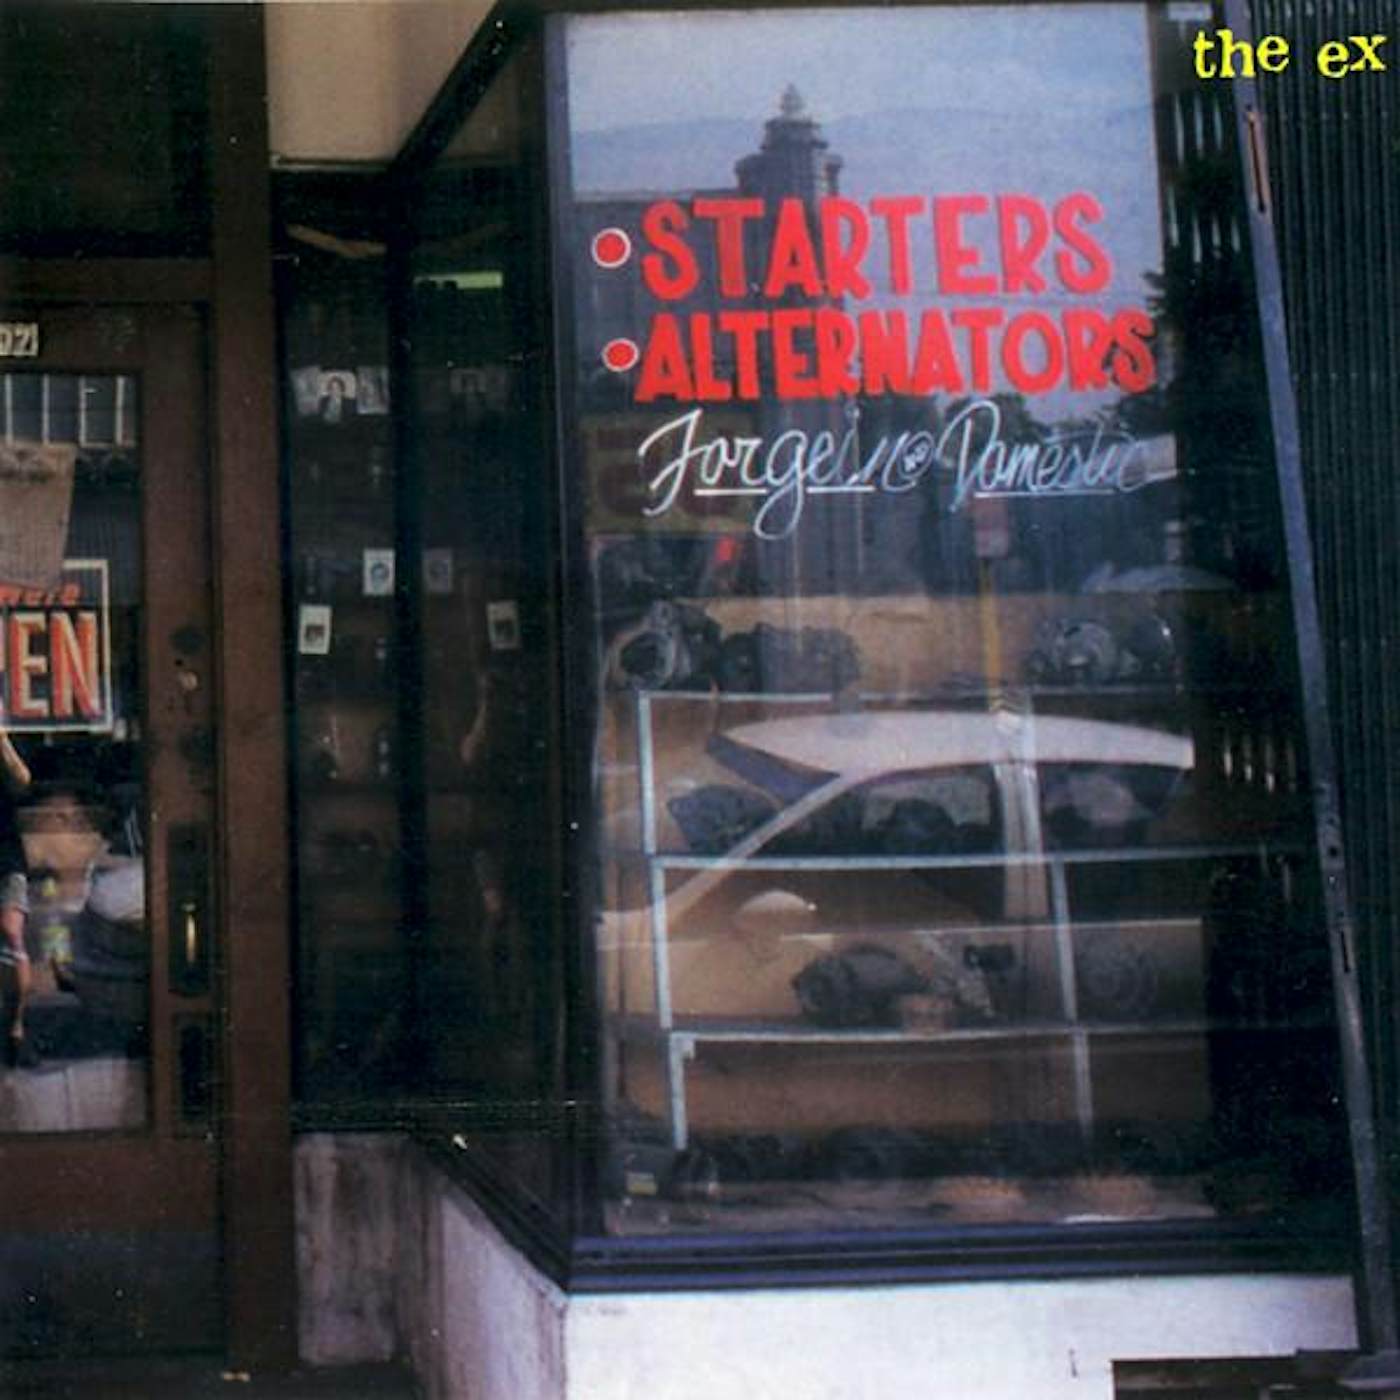 Ex STARTERS ALTERNATORS CD